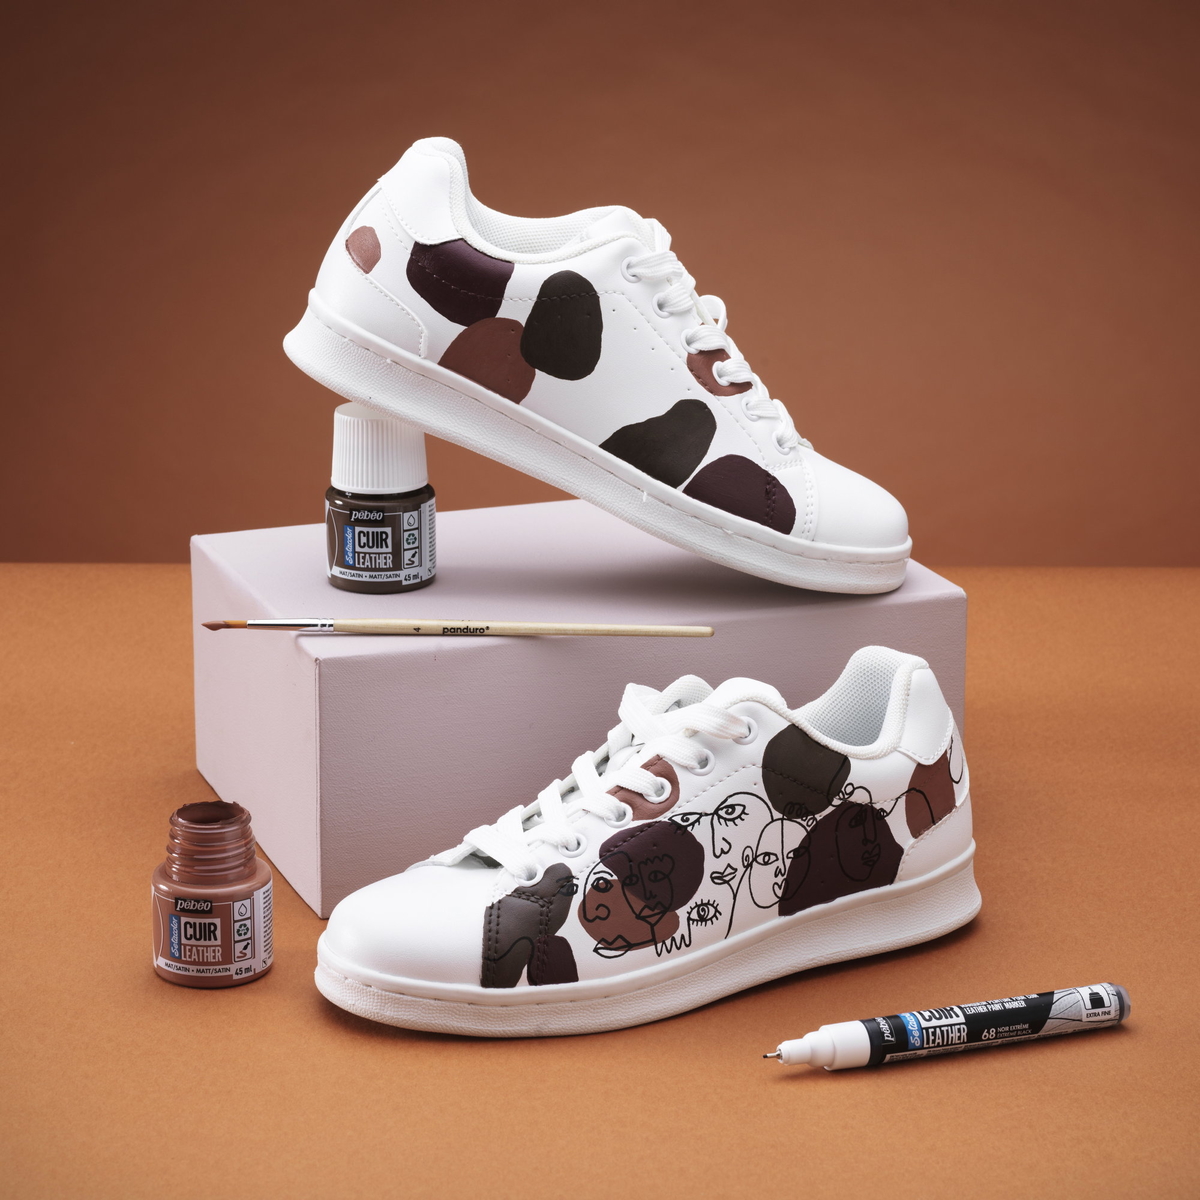 Male på sneakers med lærfarge